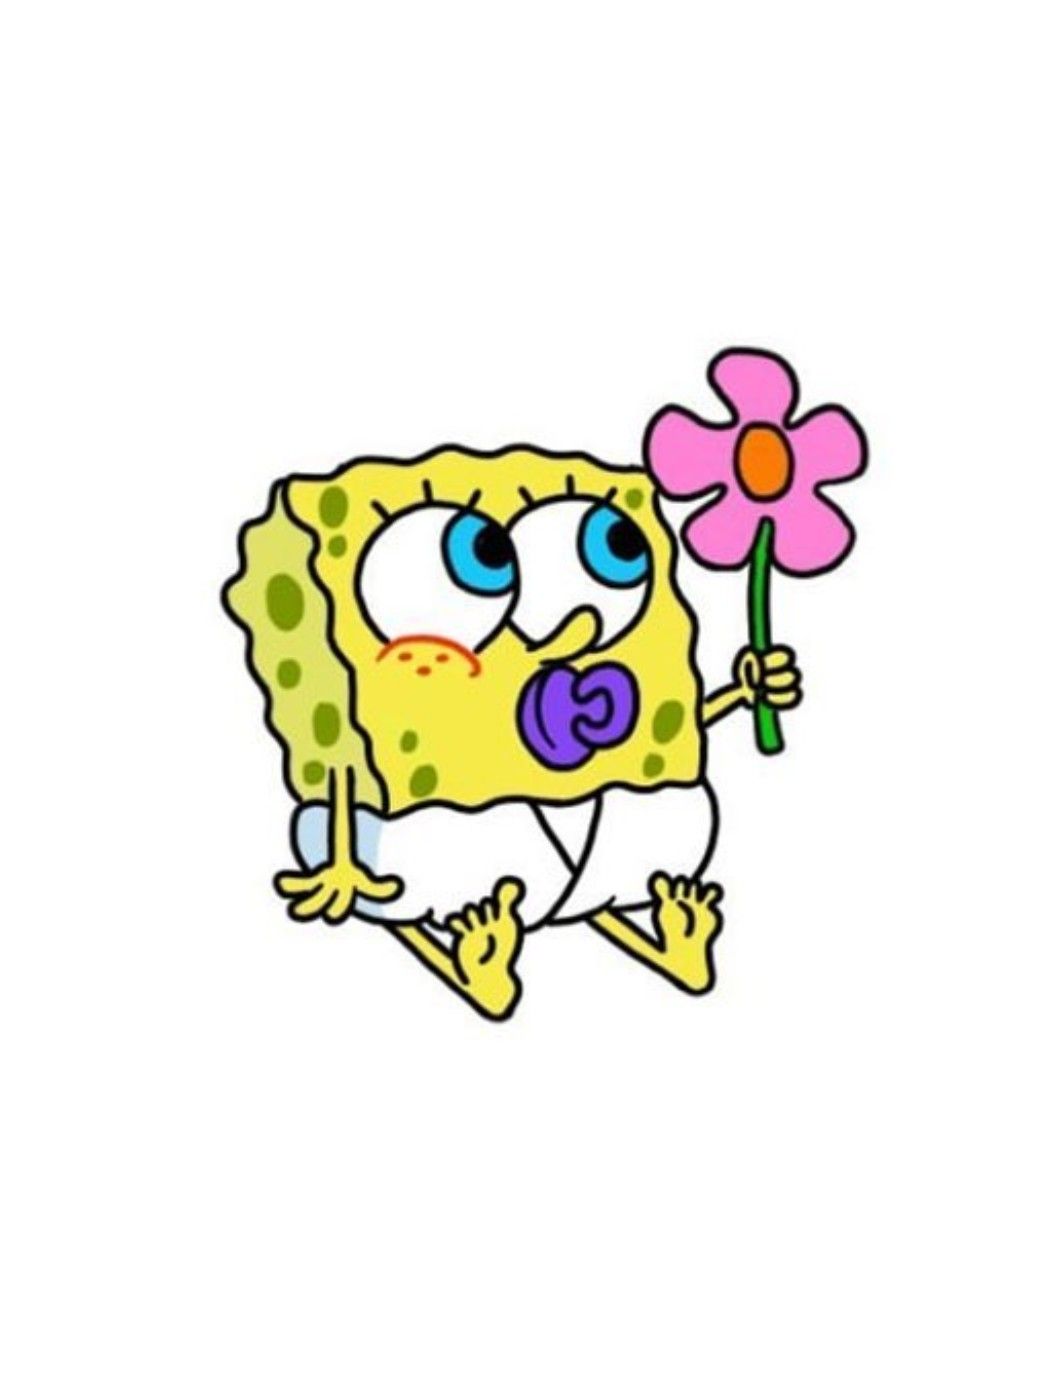 Baby Spongebob. Spongebob painting, Spongebob drawings, Spongebob wallpaper